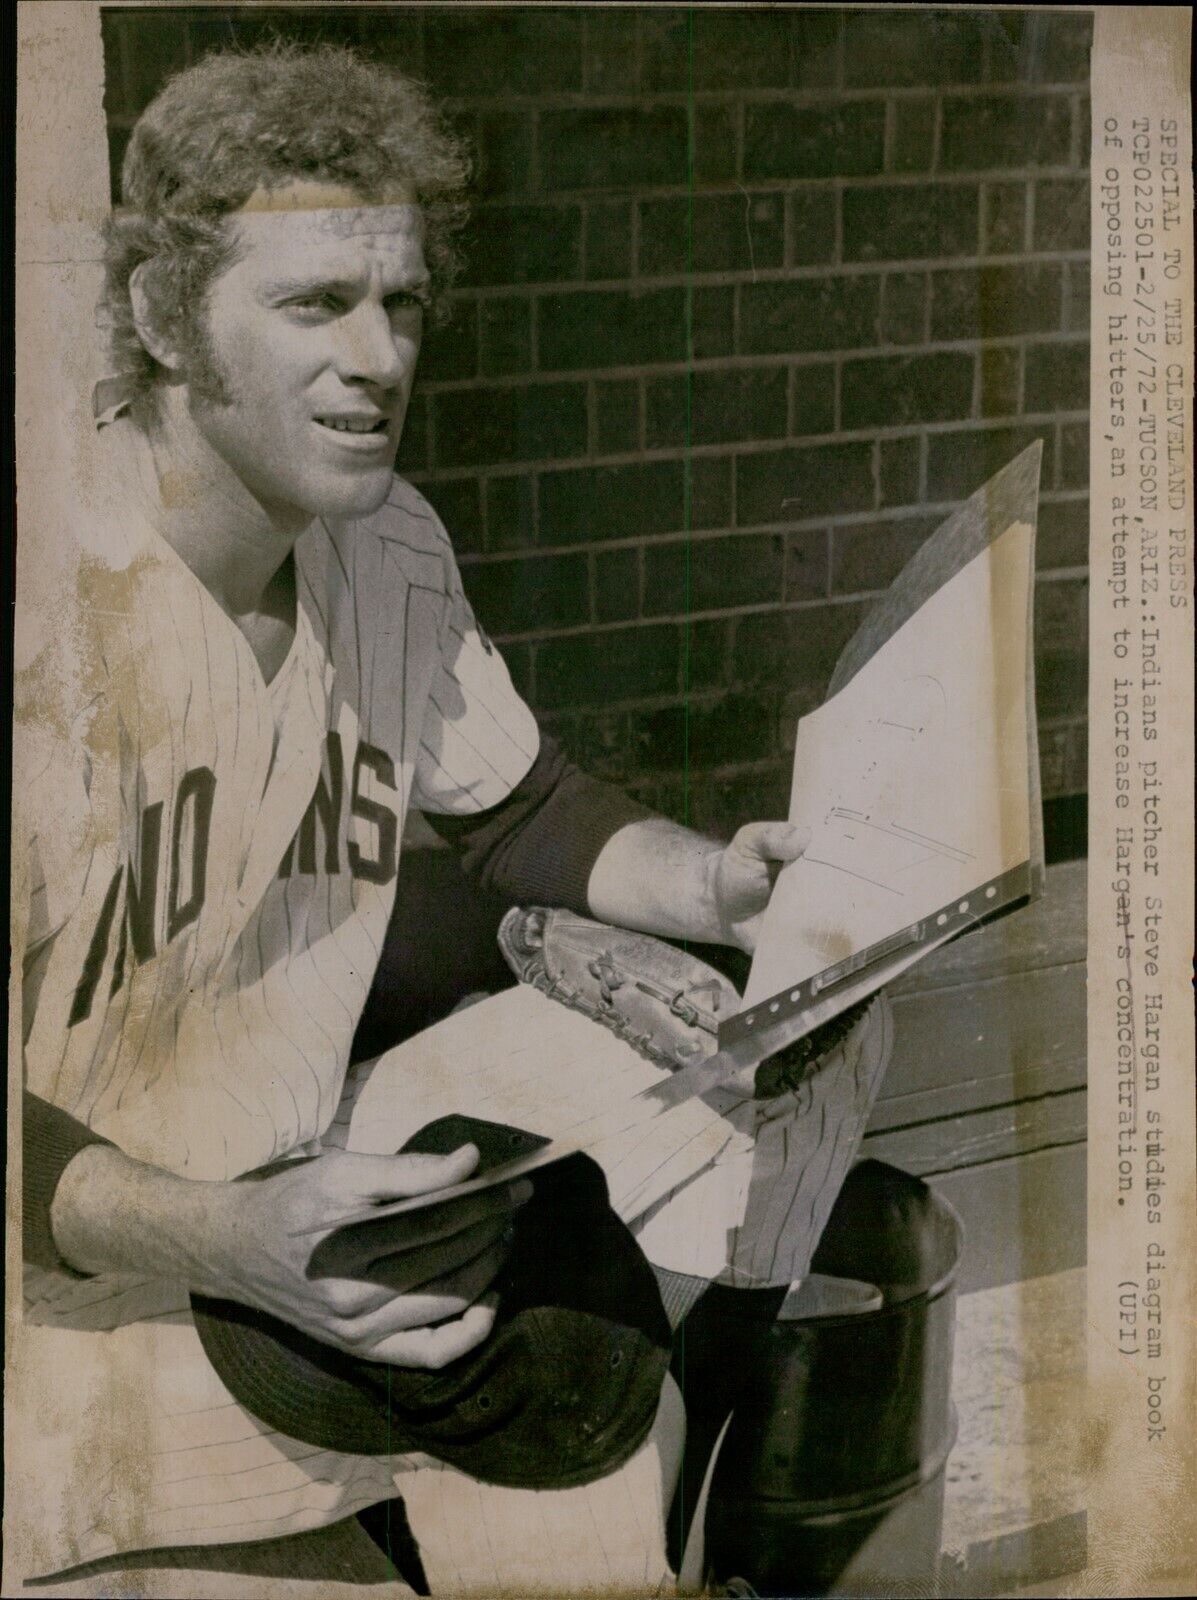 LG849 1972 Wire Photo STEVE HARGAN Cleveland Indians Baseball Pitcher Studying